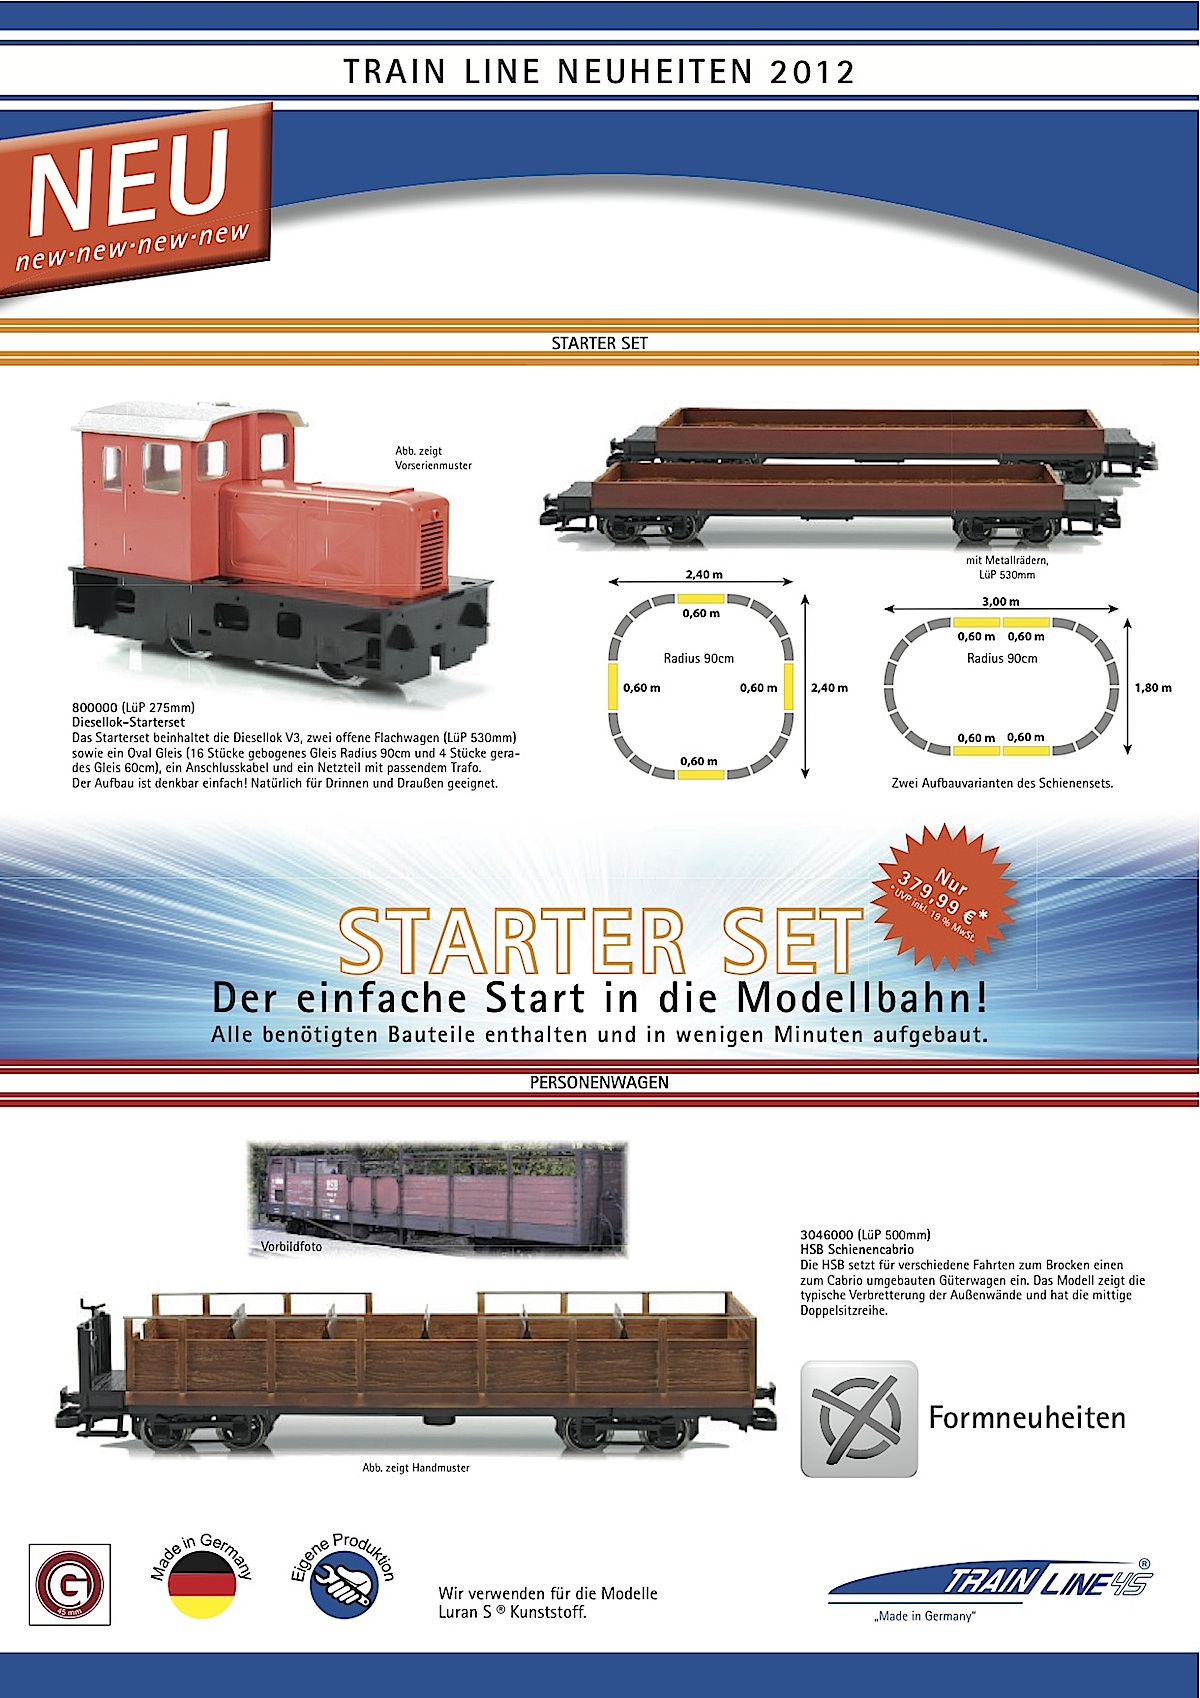 Train Line Neuheiten (New Items) 2012